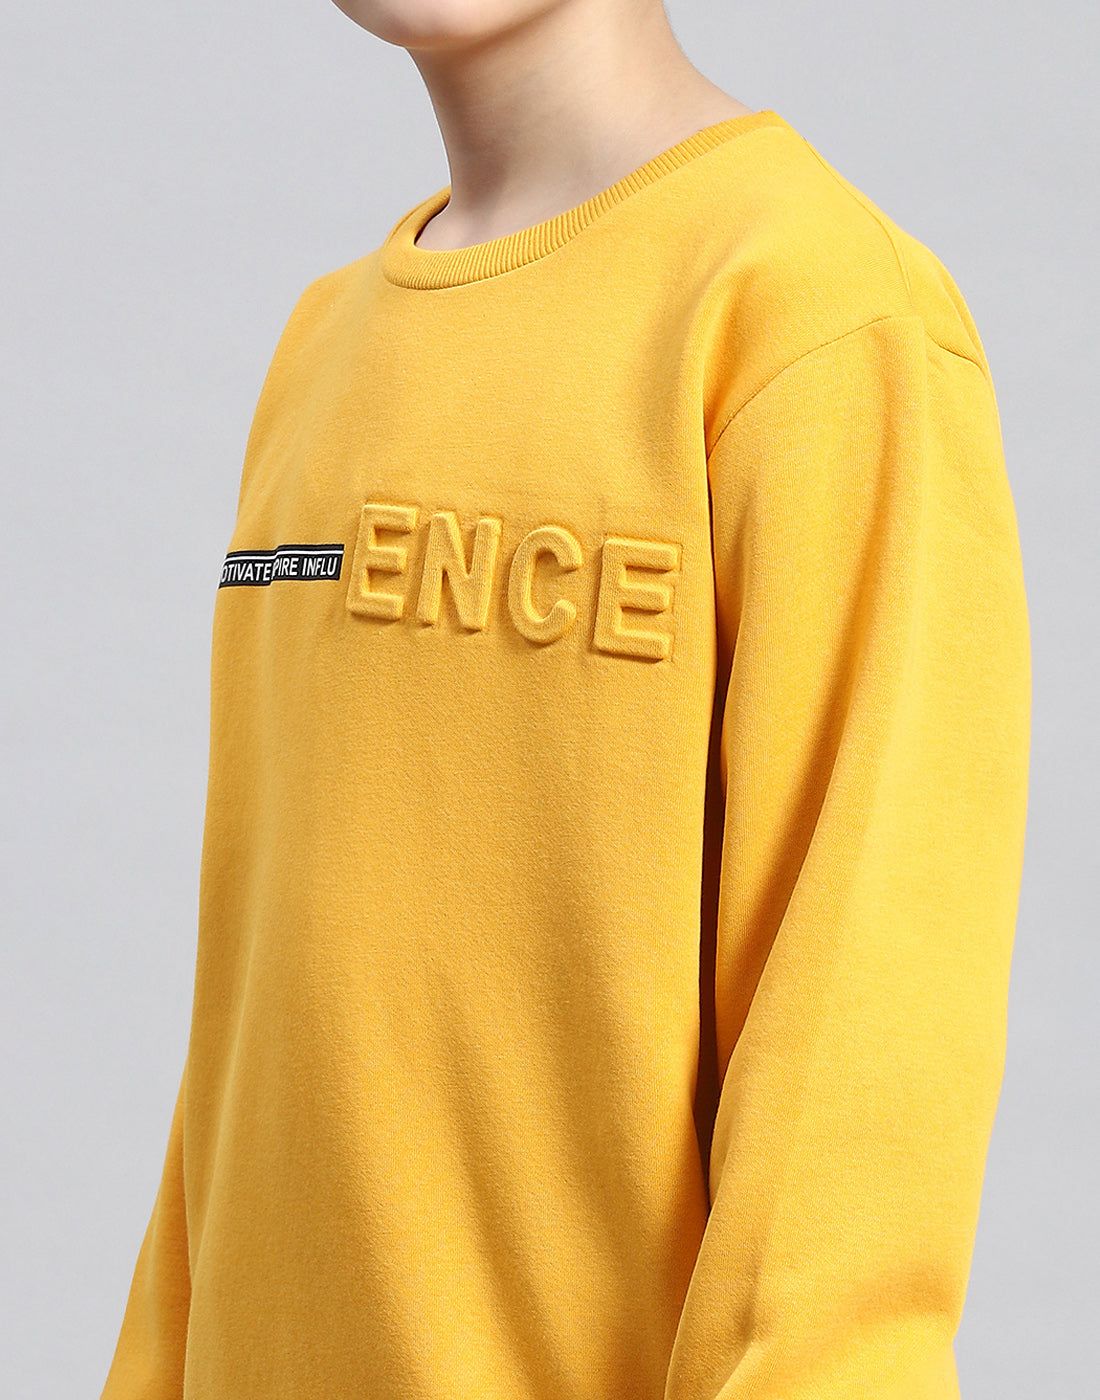 Boys Mustard Solid Round Neck Full Sleeve Sweatshirt